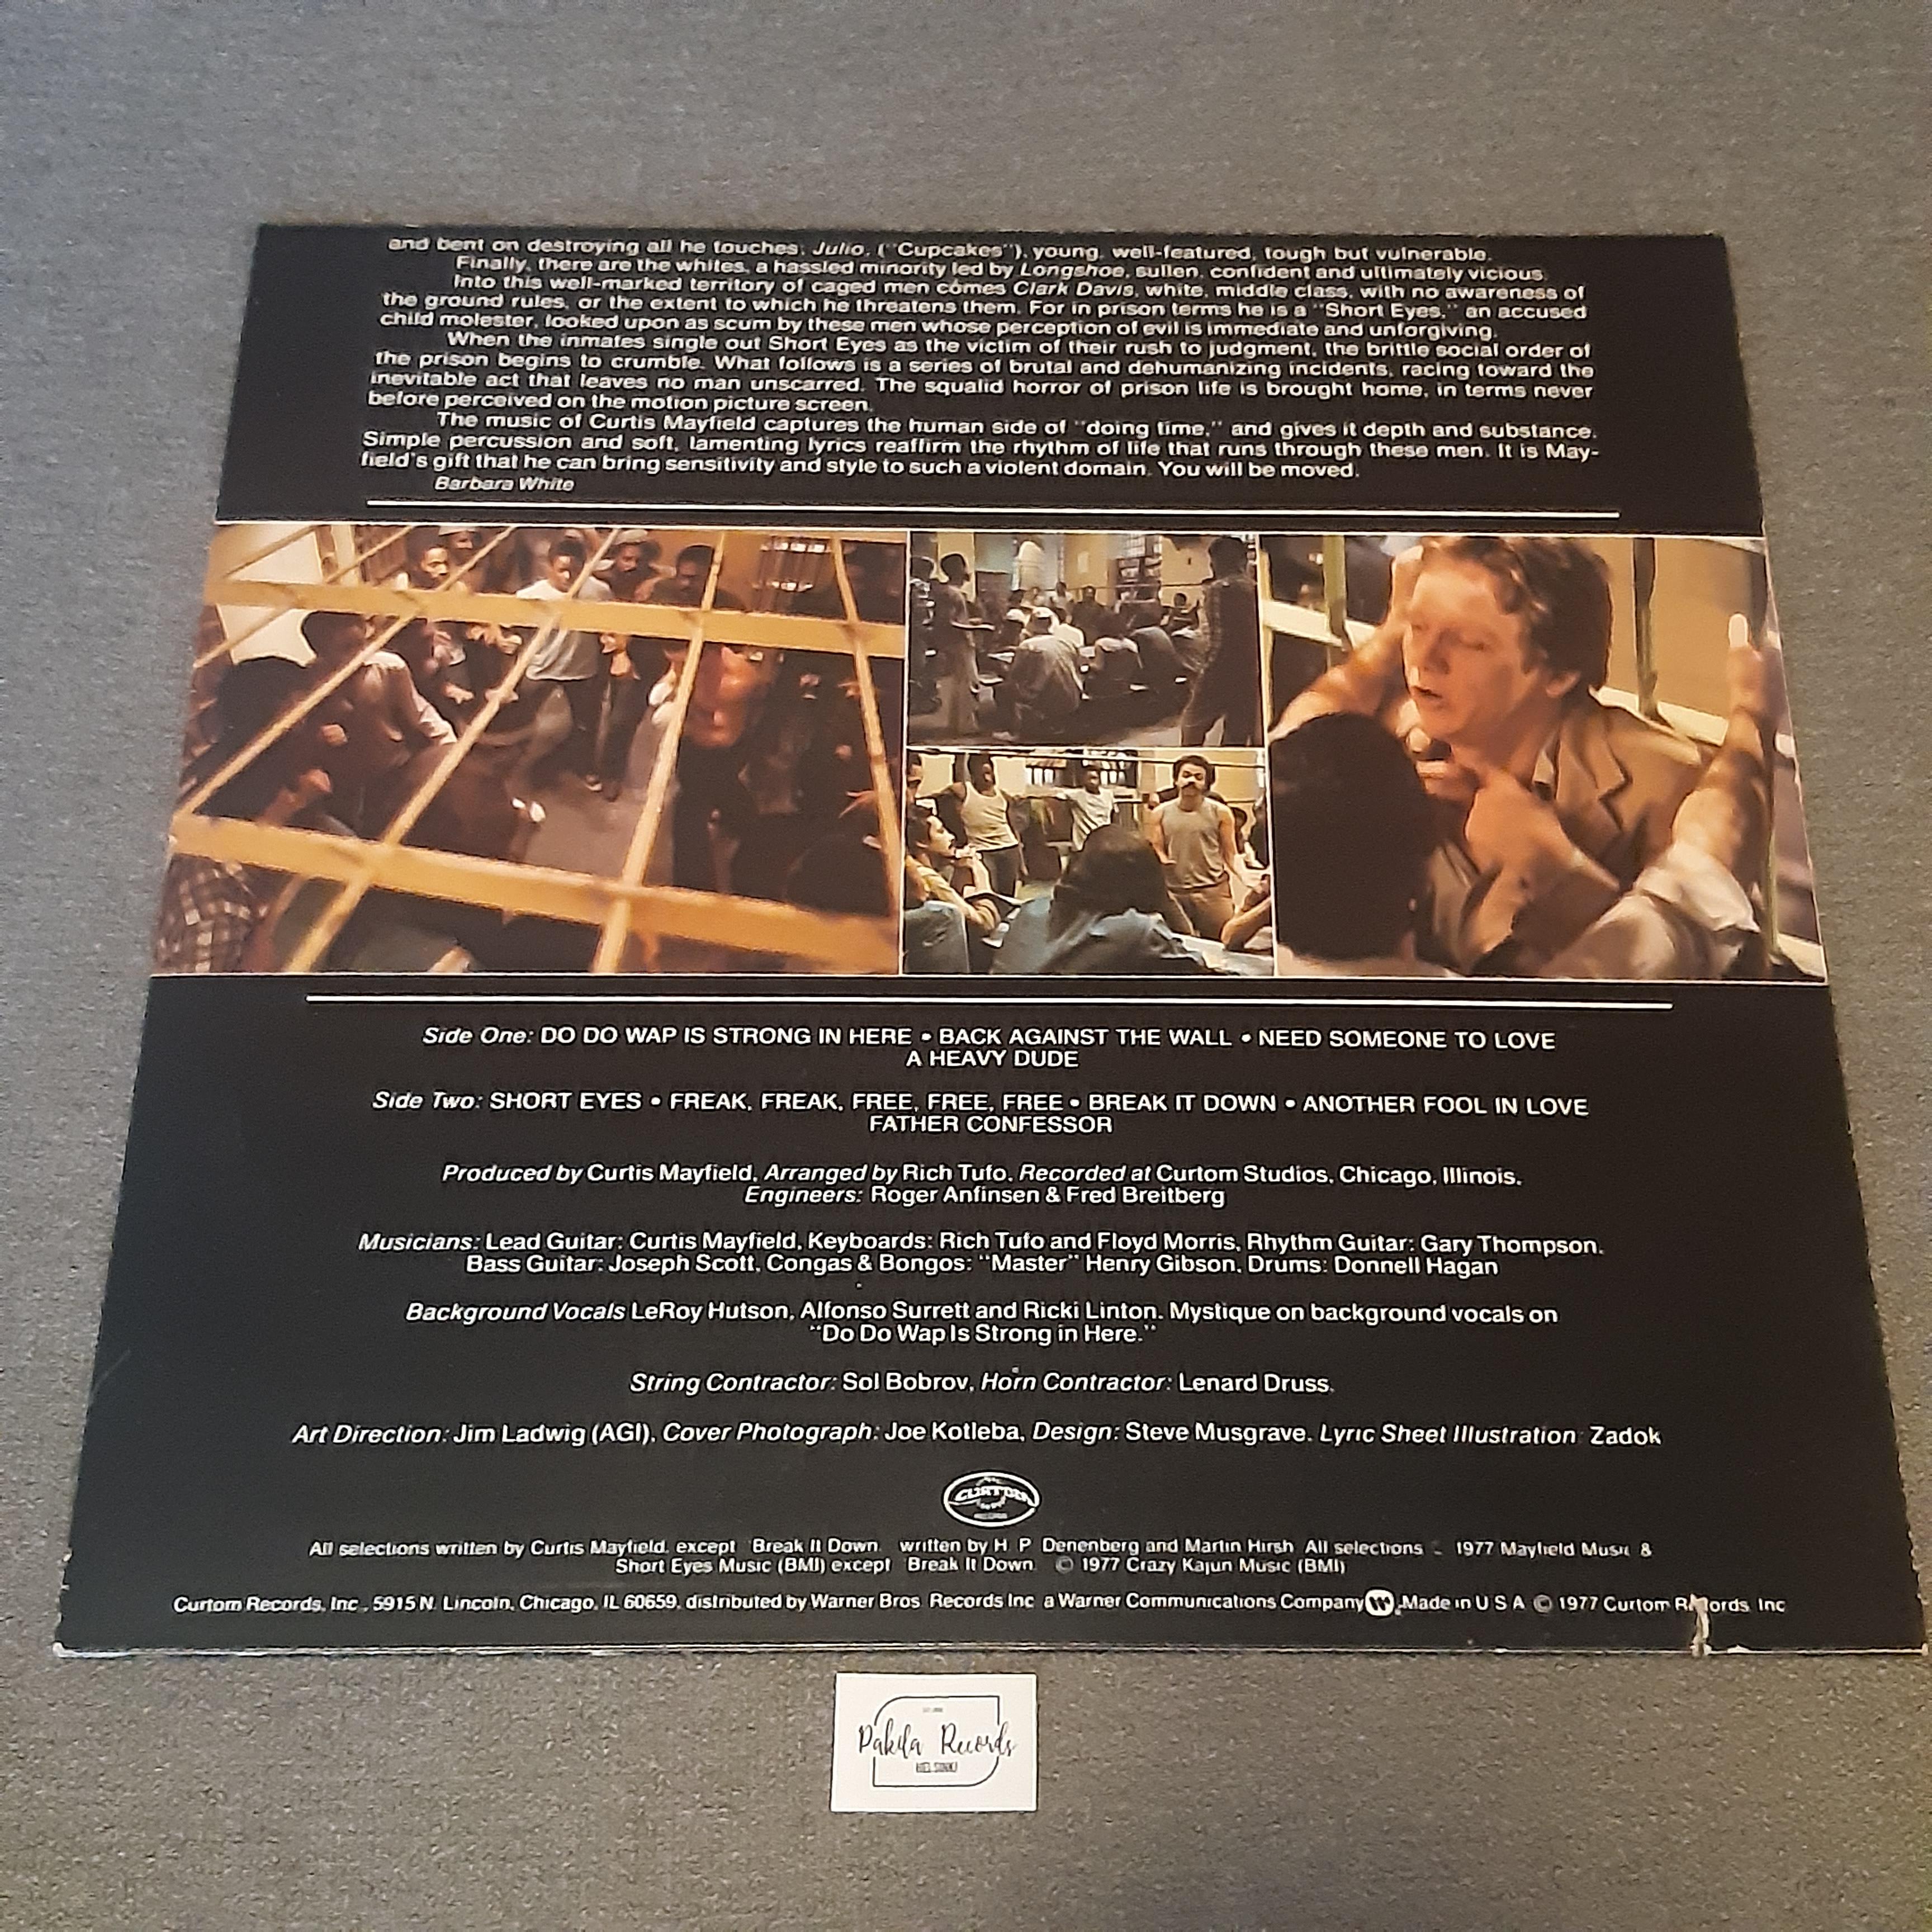 Curtis Mayfield - Short Eyes, The Original Picture Soundtrack - LP (käytetty)